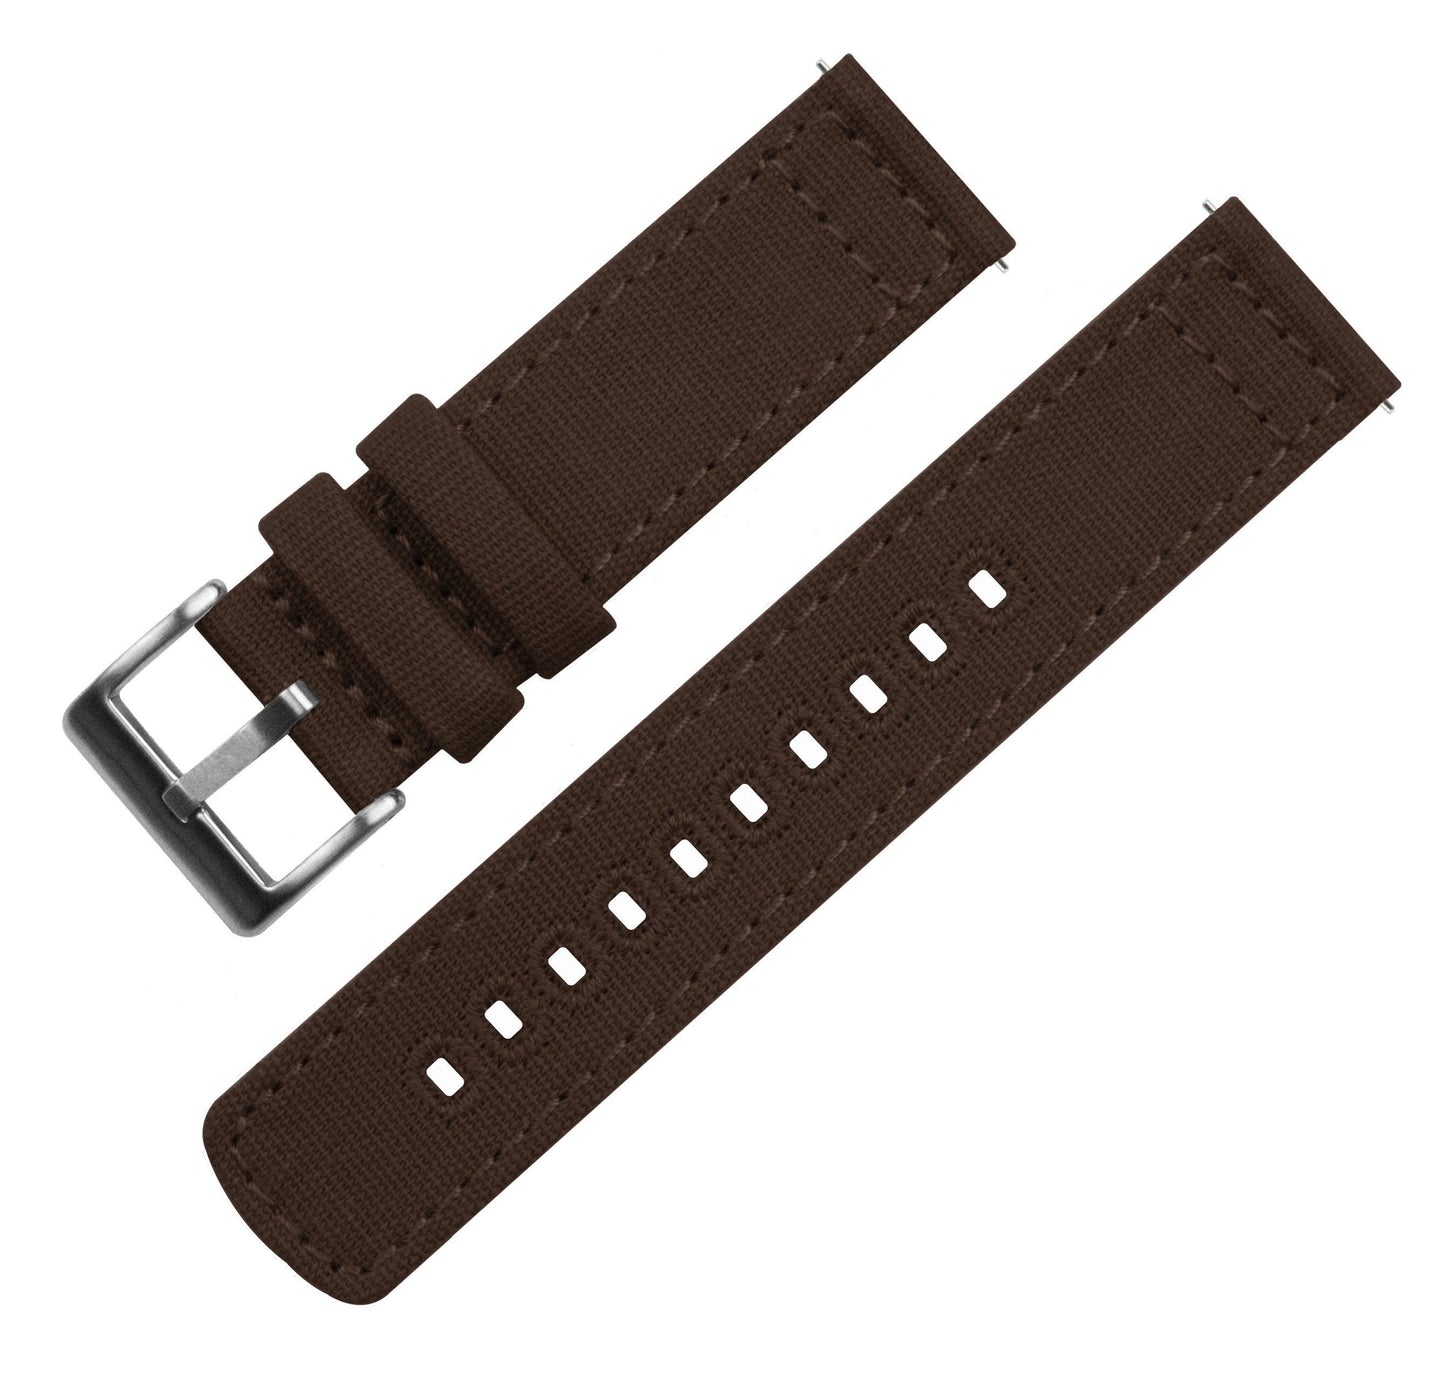 Zenwatch & Zenwatch 2 | Chocolate Brown Canvas - Barton Watch Bands